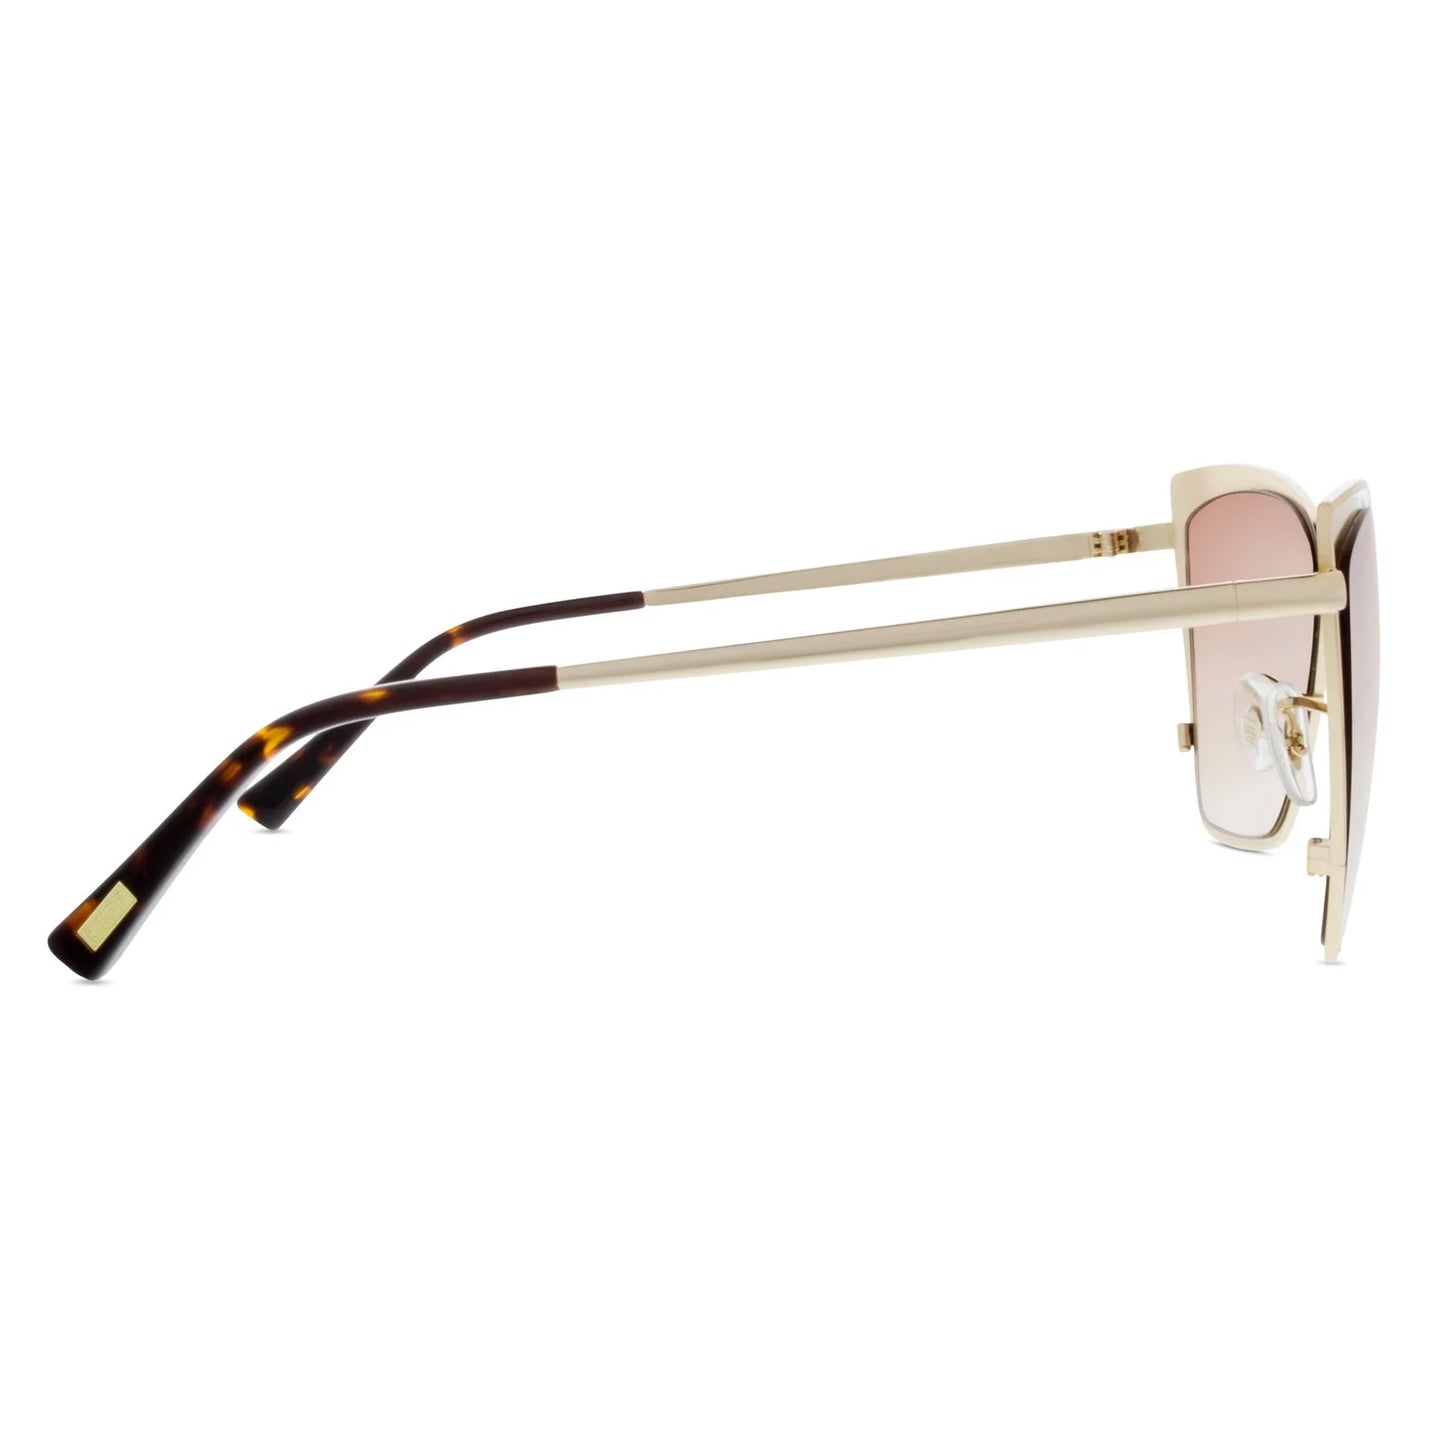 DIFF Eyewear - Becky - Gold Flash Brown Gradient Sunglasses